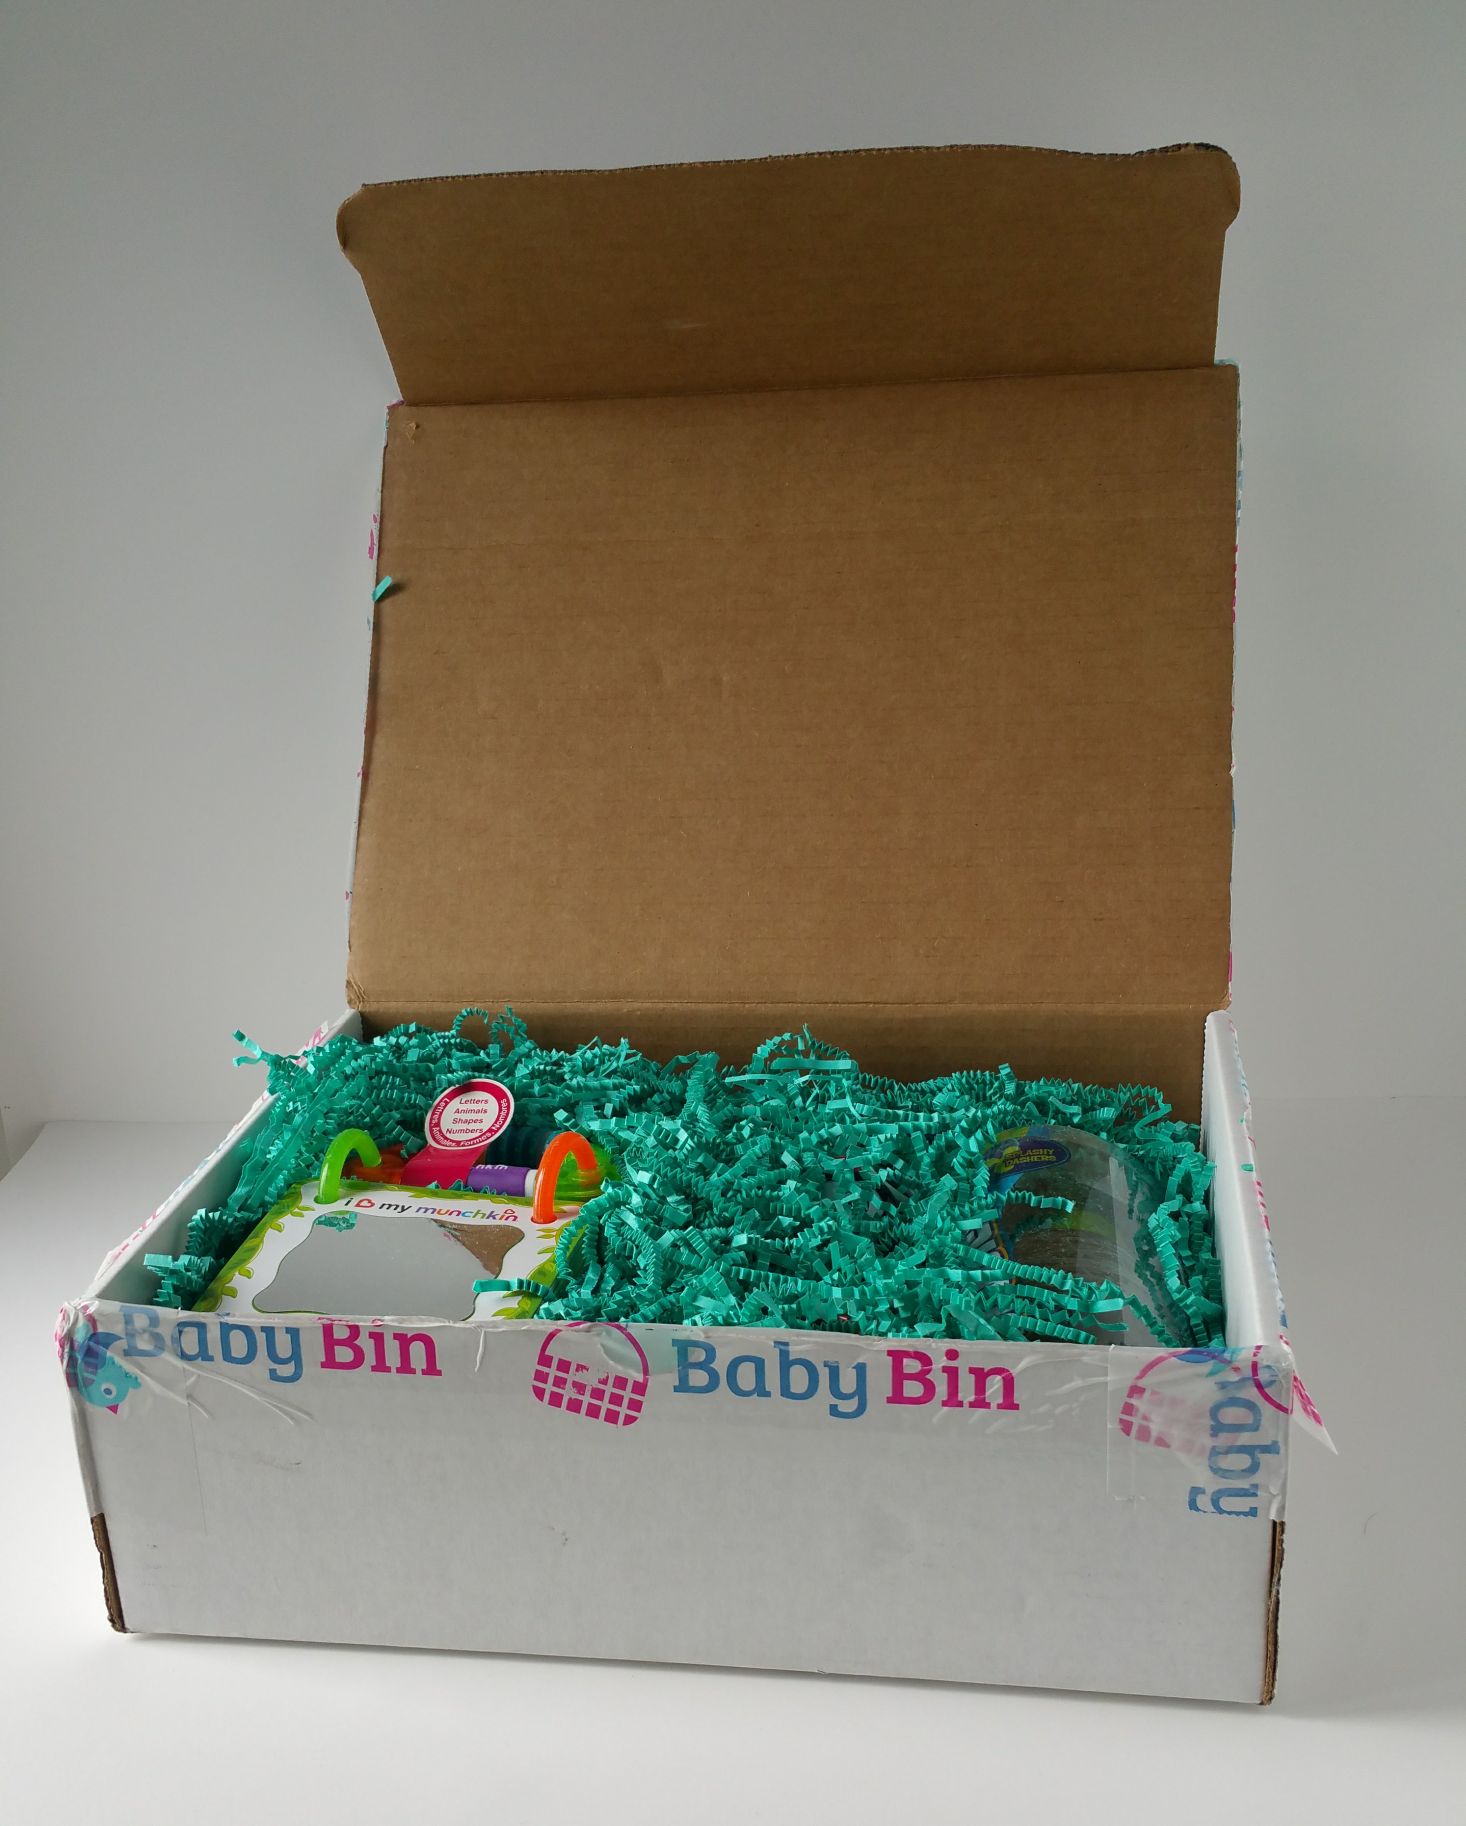 Baby-Bin-January-2017-inside-box